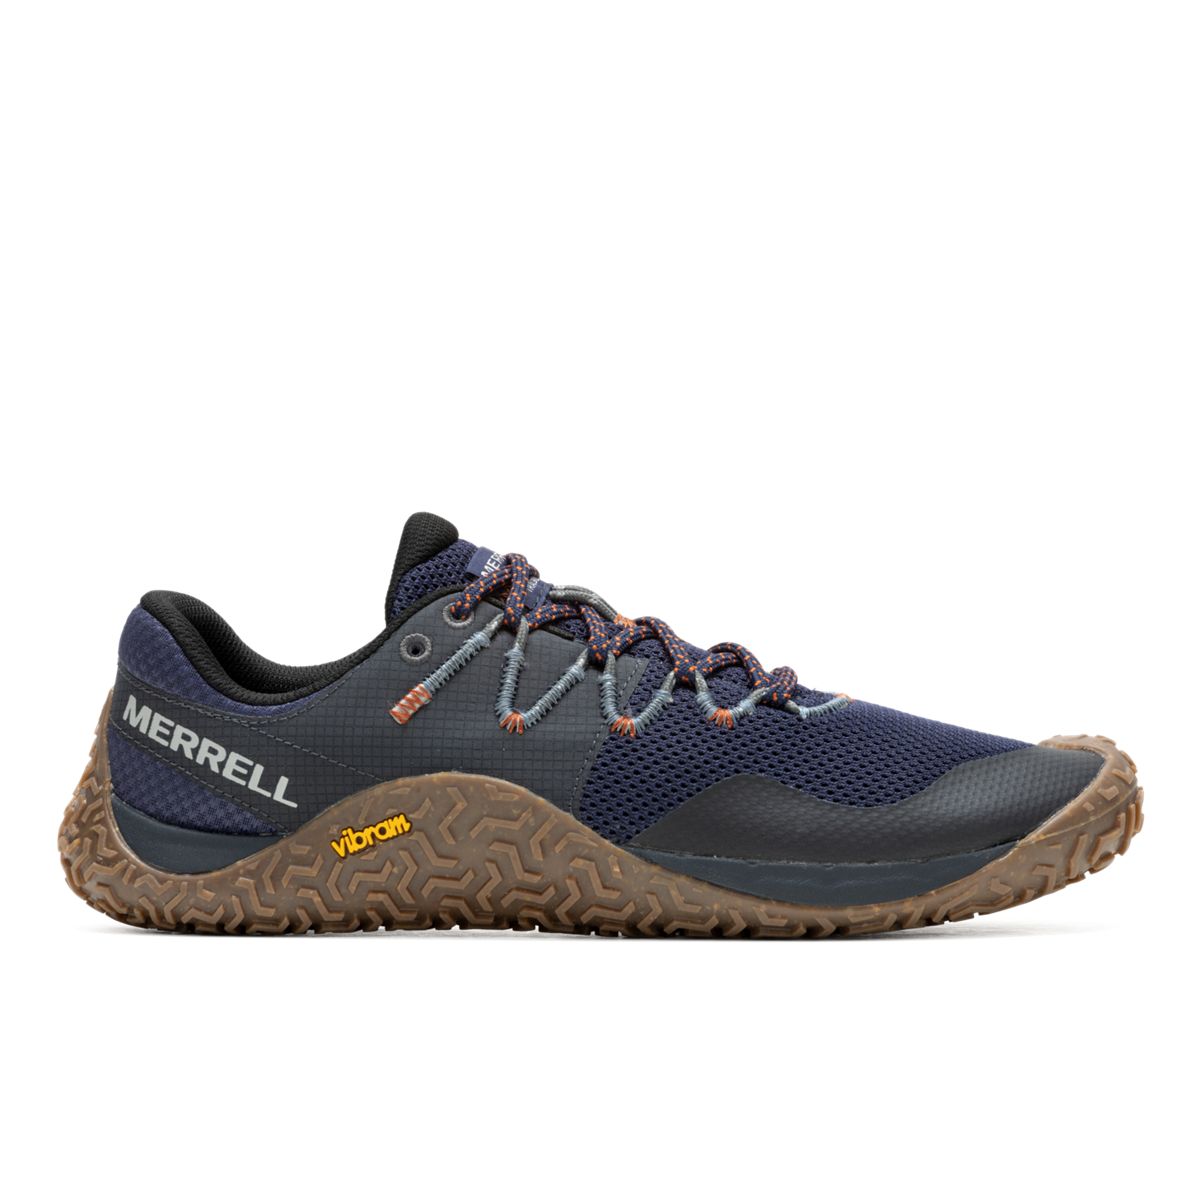 Merrell Barefoot Trail Glove Shoes Sneaker Smoke Gray Adventure Yellow 9 Men